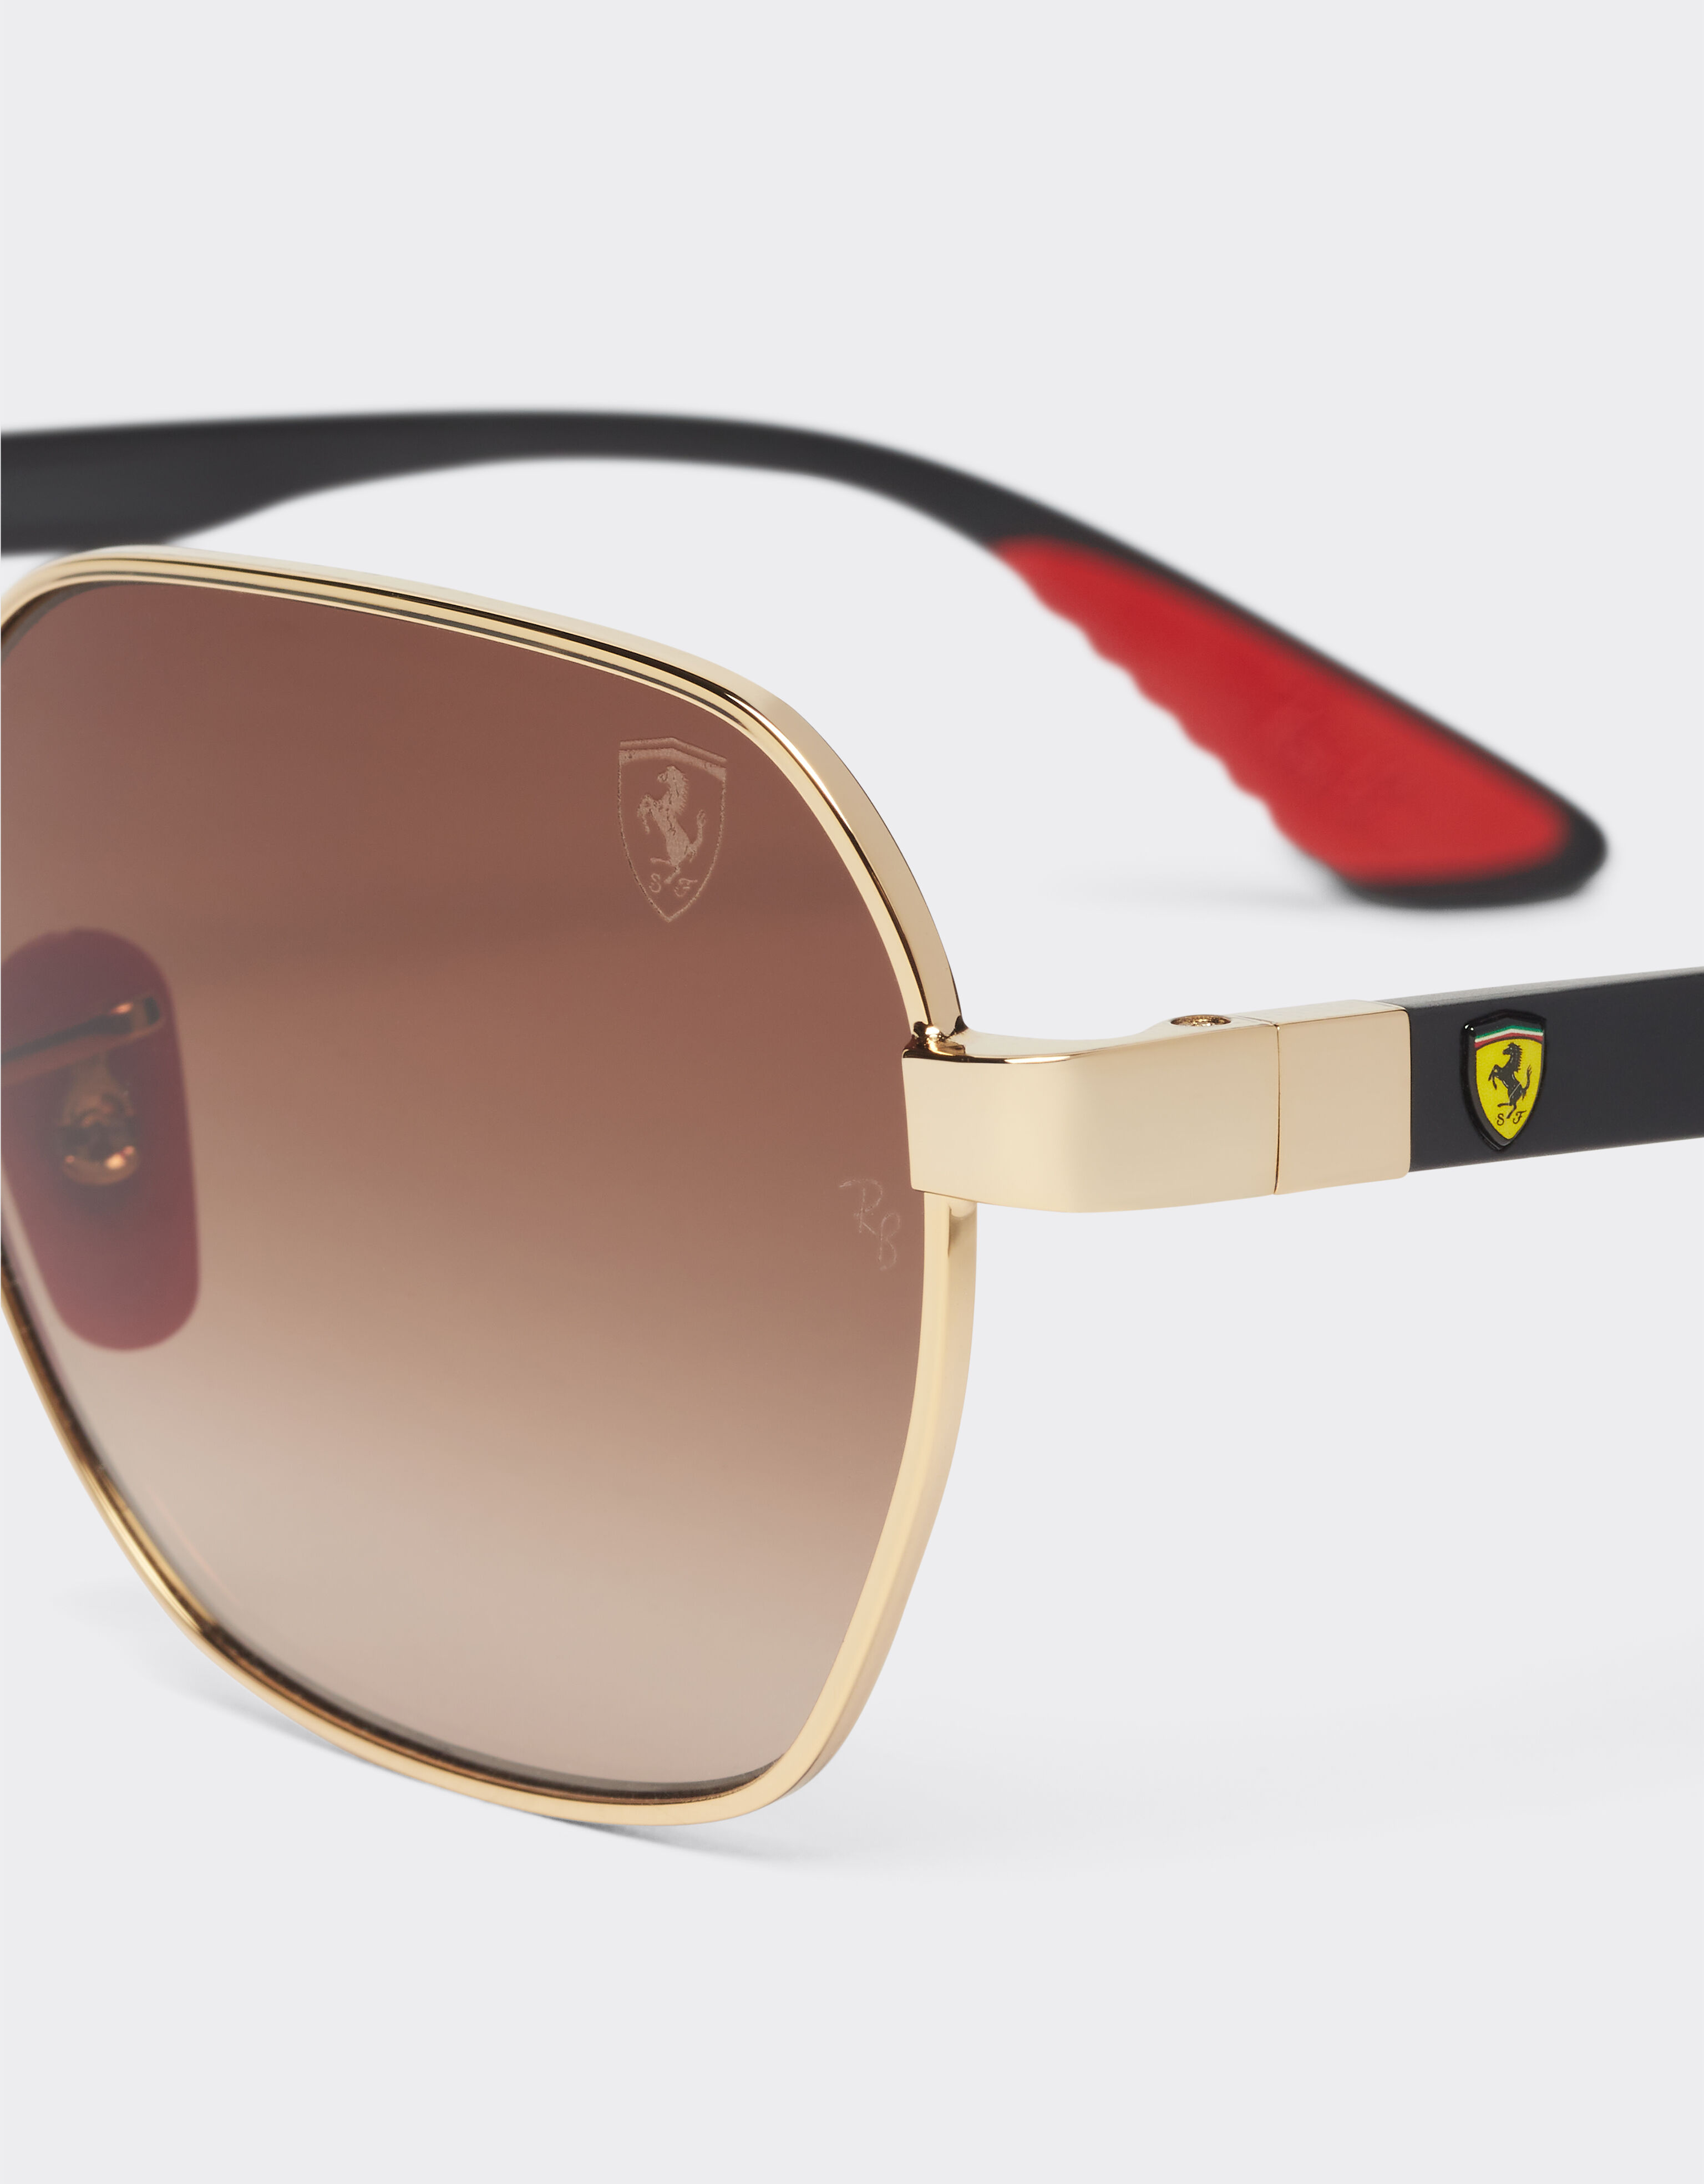 Ferrari Gafas de sol Ray-Ban para la Scuderia Ferrari 0RB3794M doradas con lentes marrones degradadas Beige F1299f